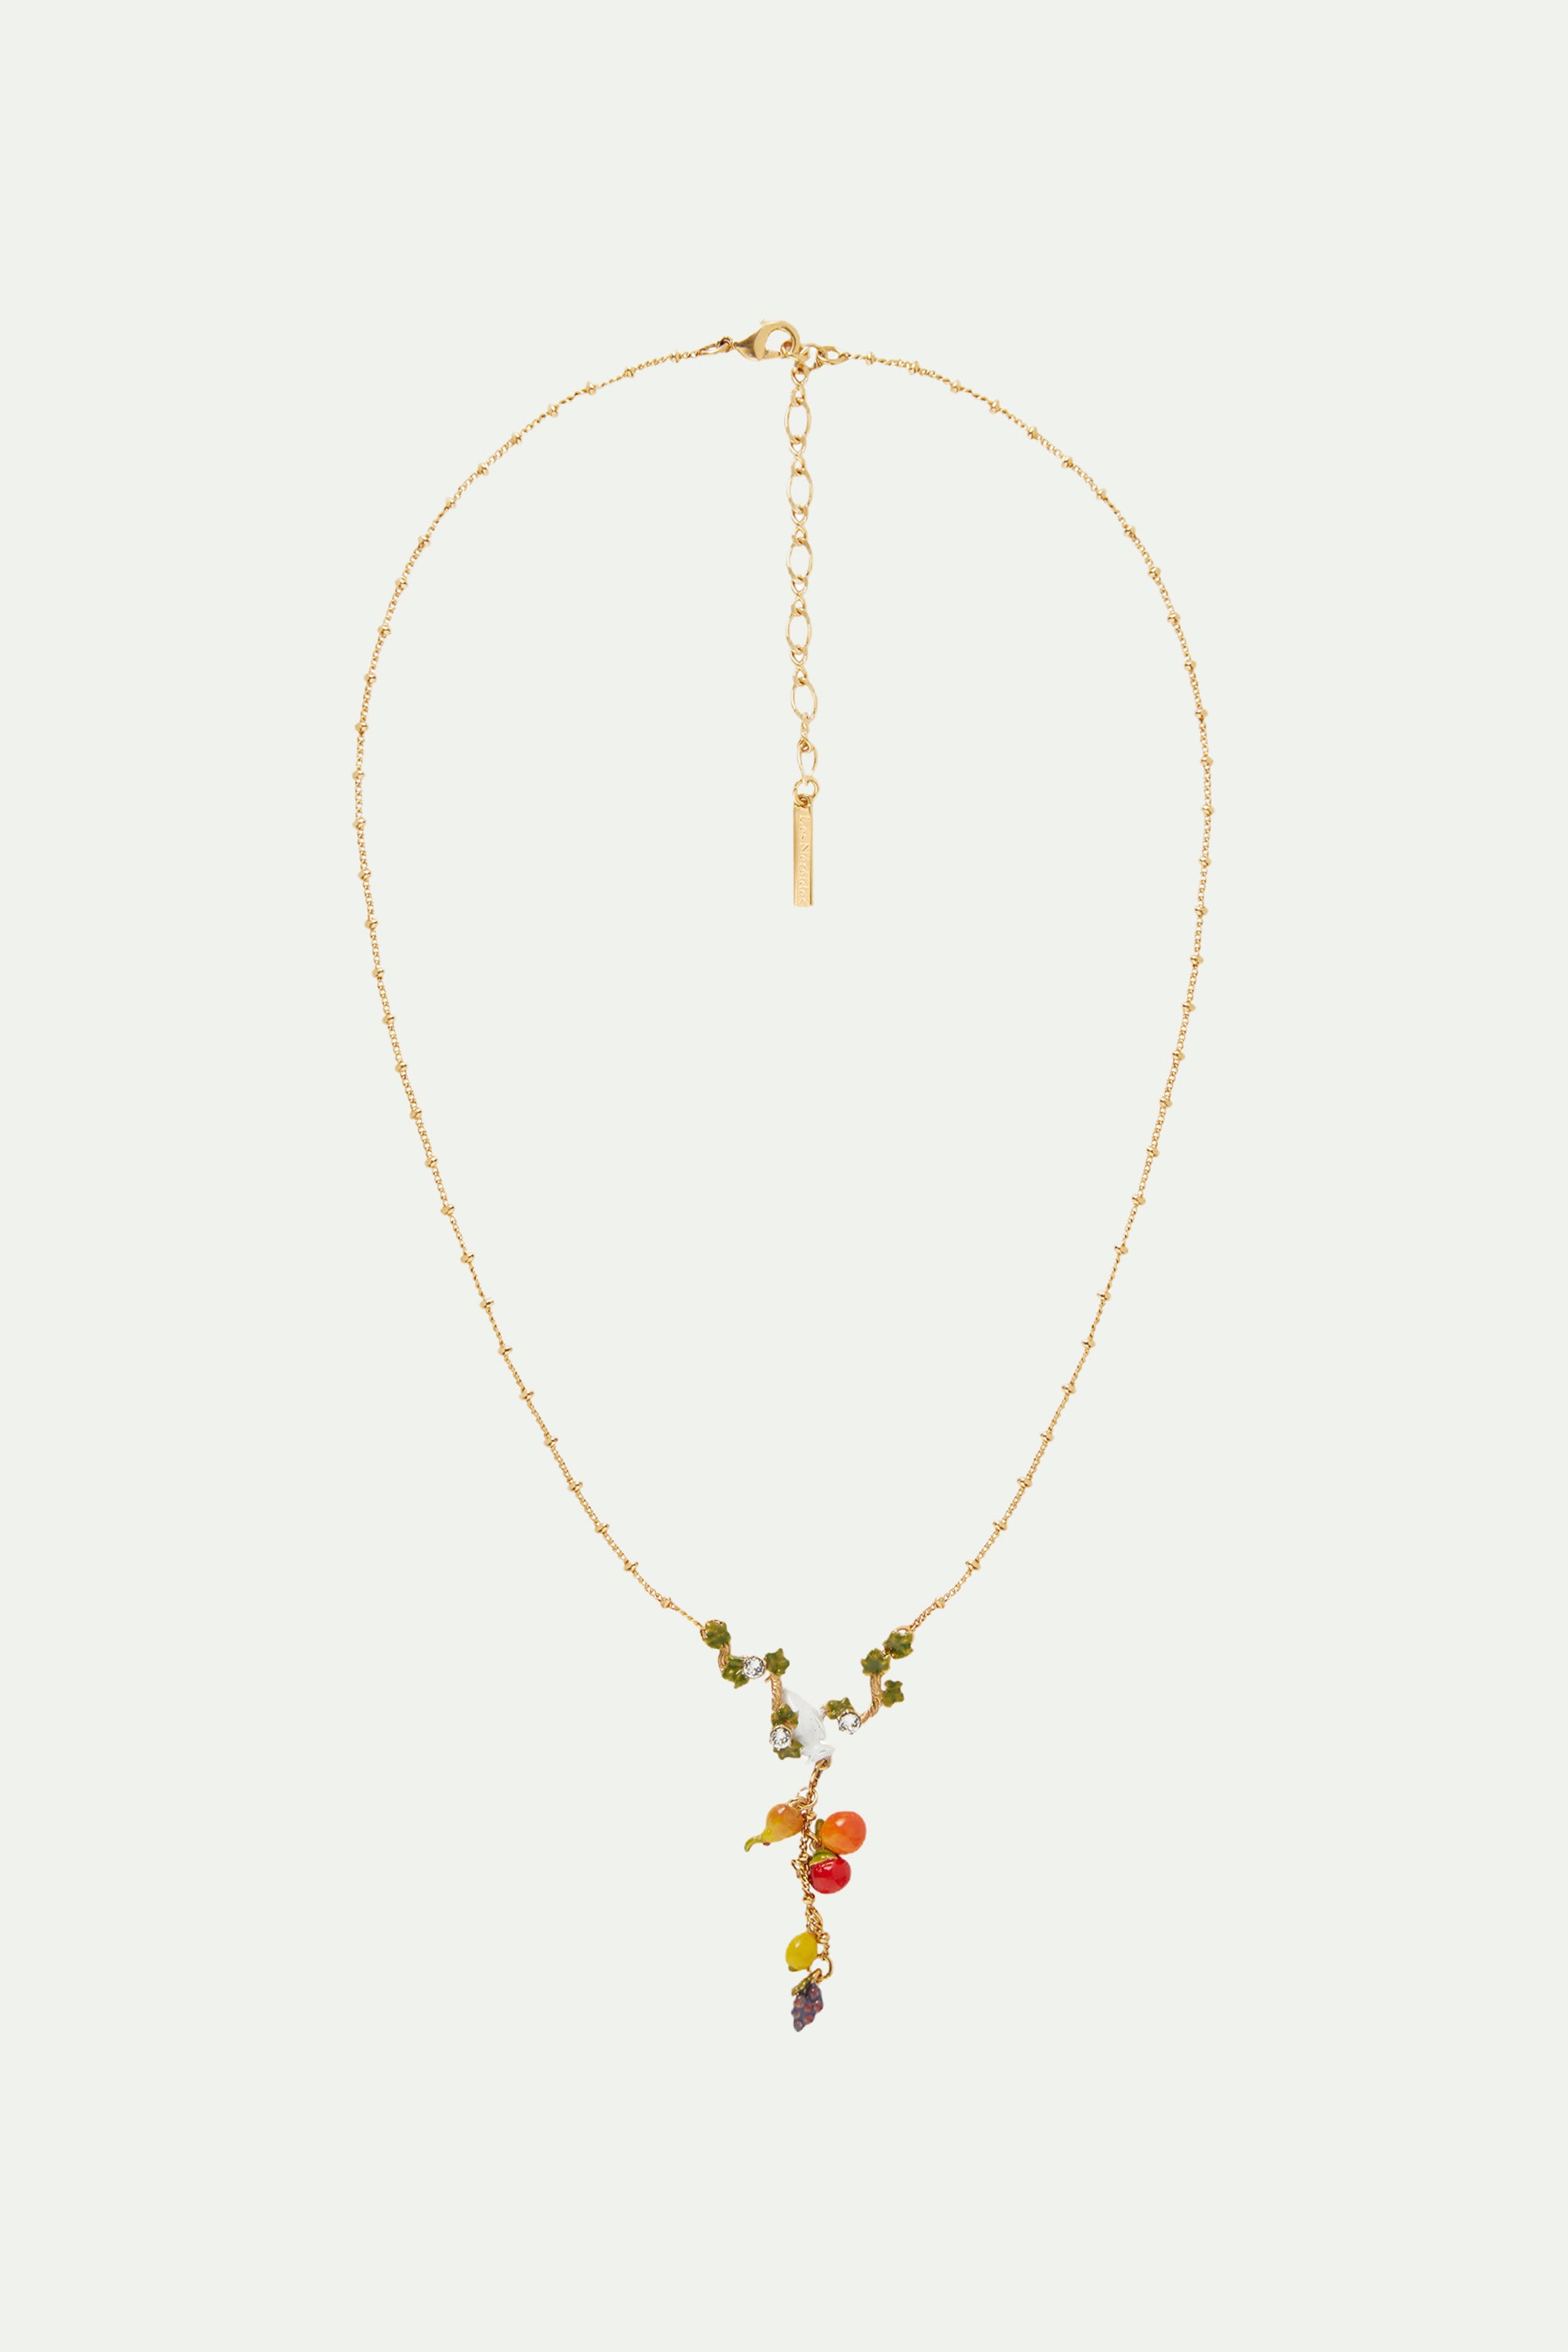 Amphora, vine leaves and fruit pendant necklace